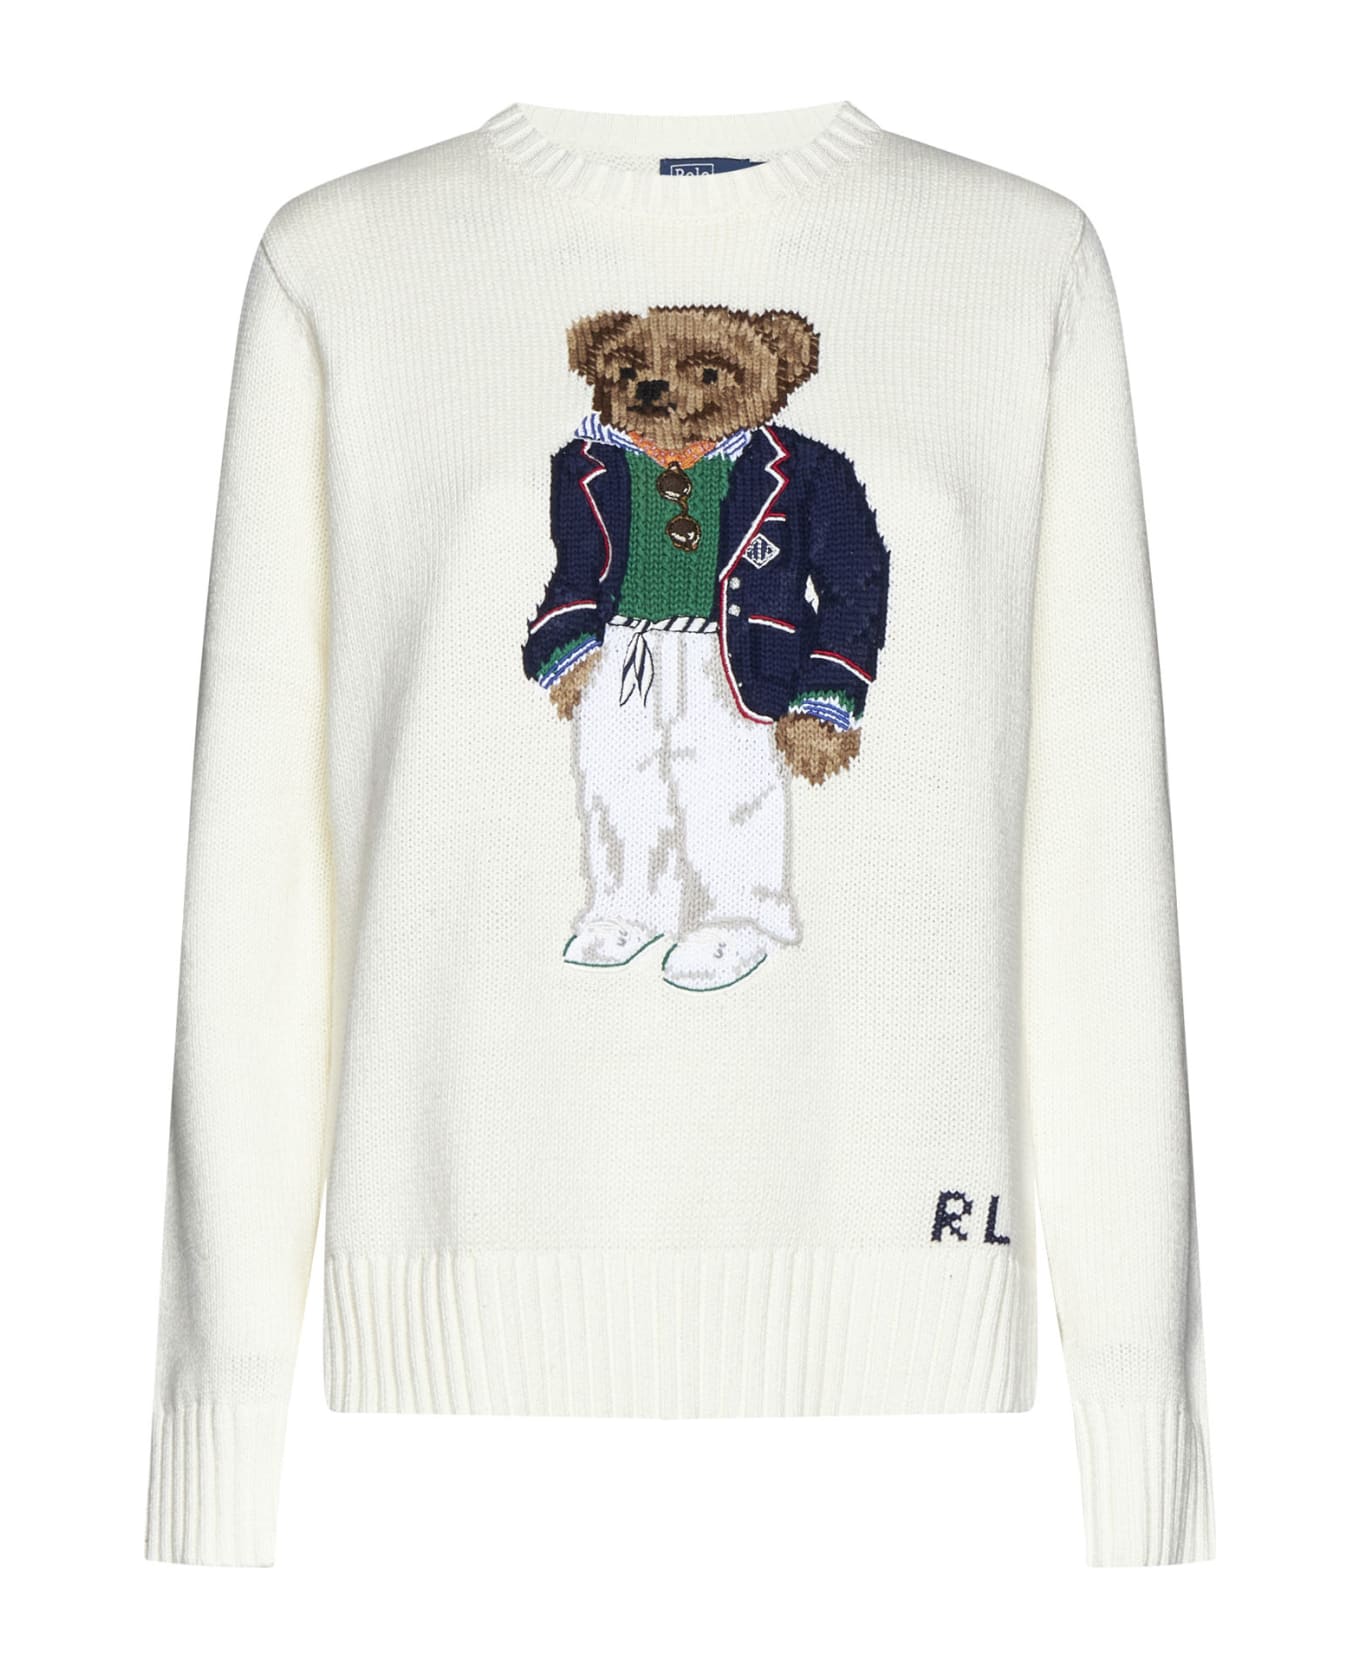 Polo Ralph Lauren Sweater - Parchment cream